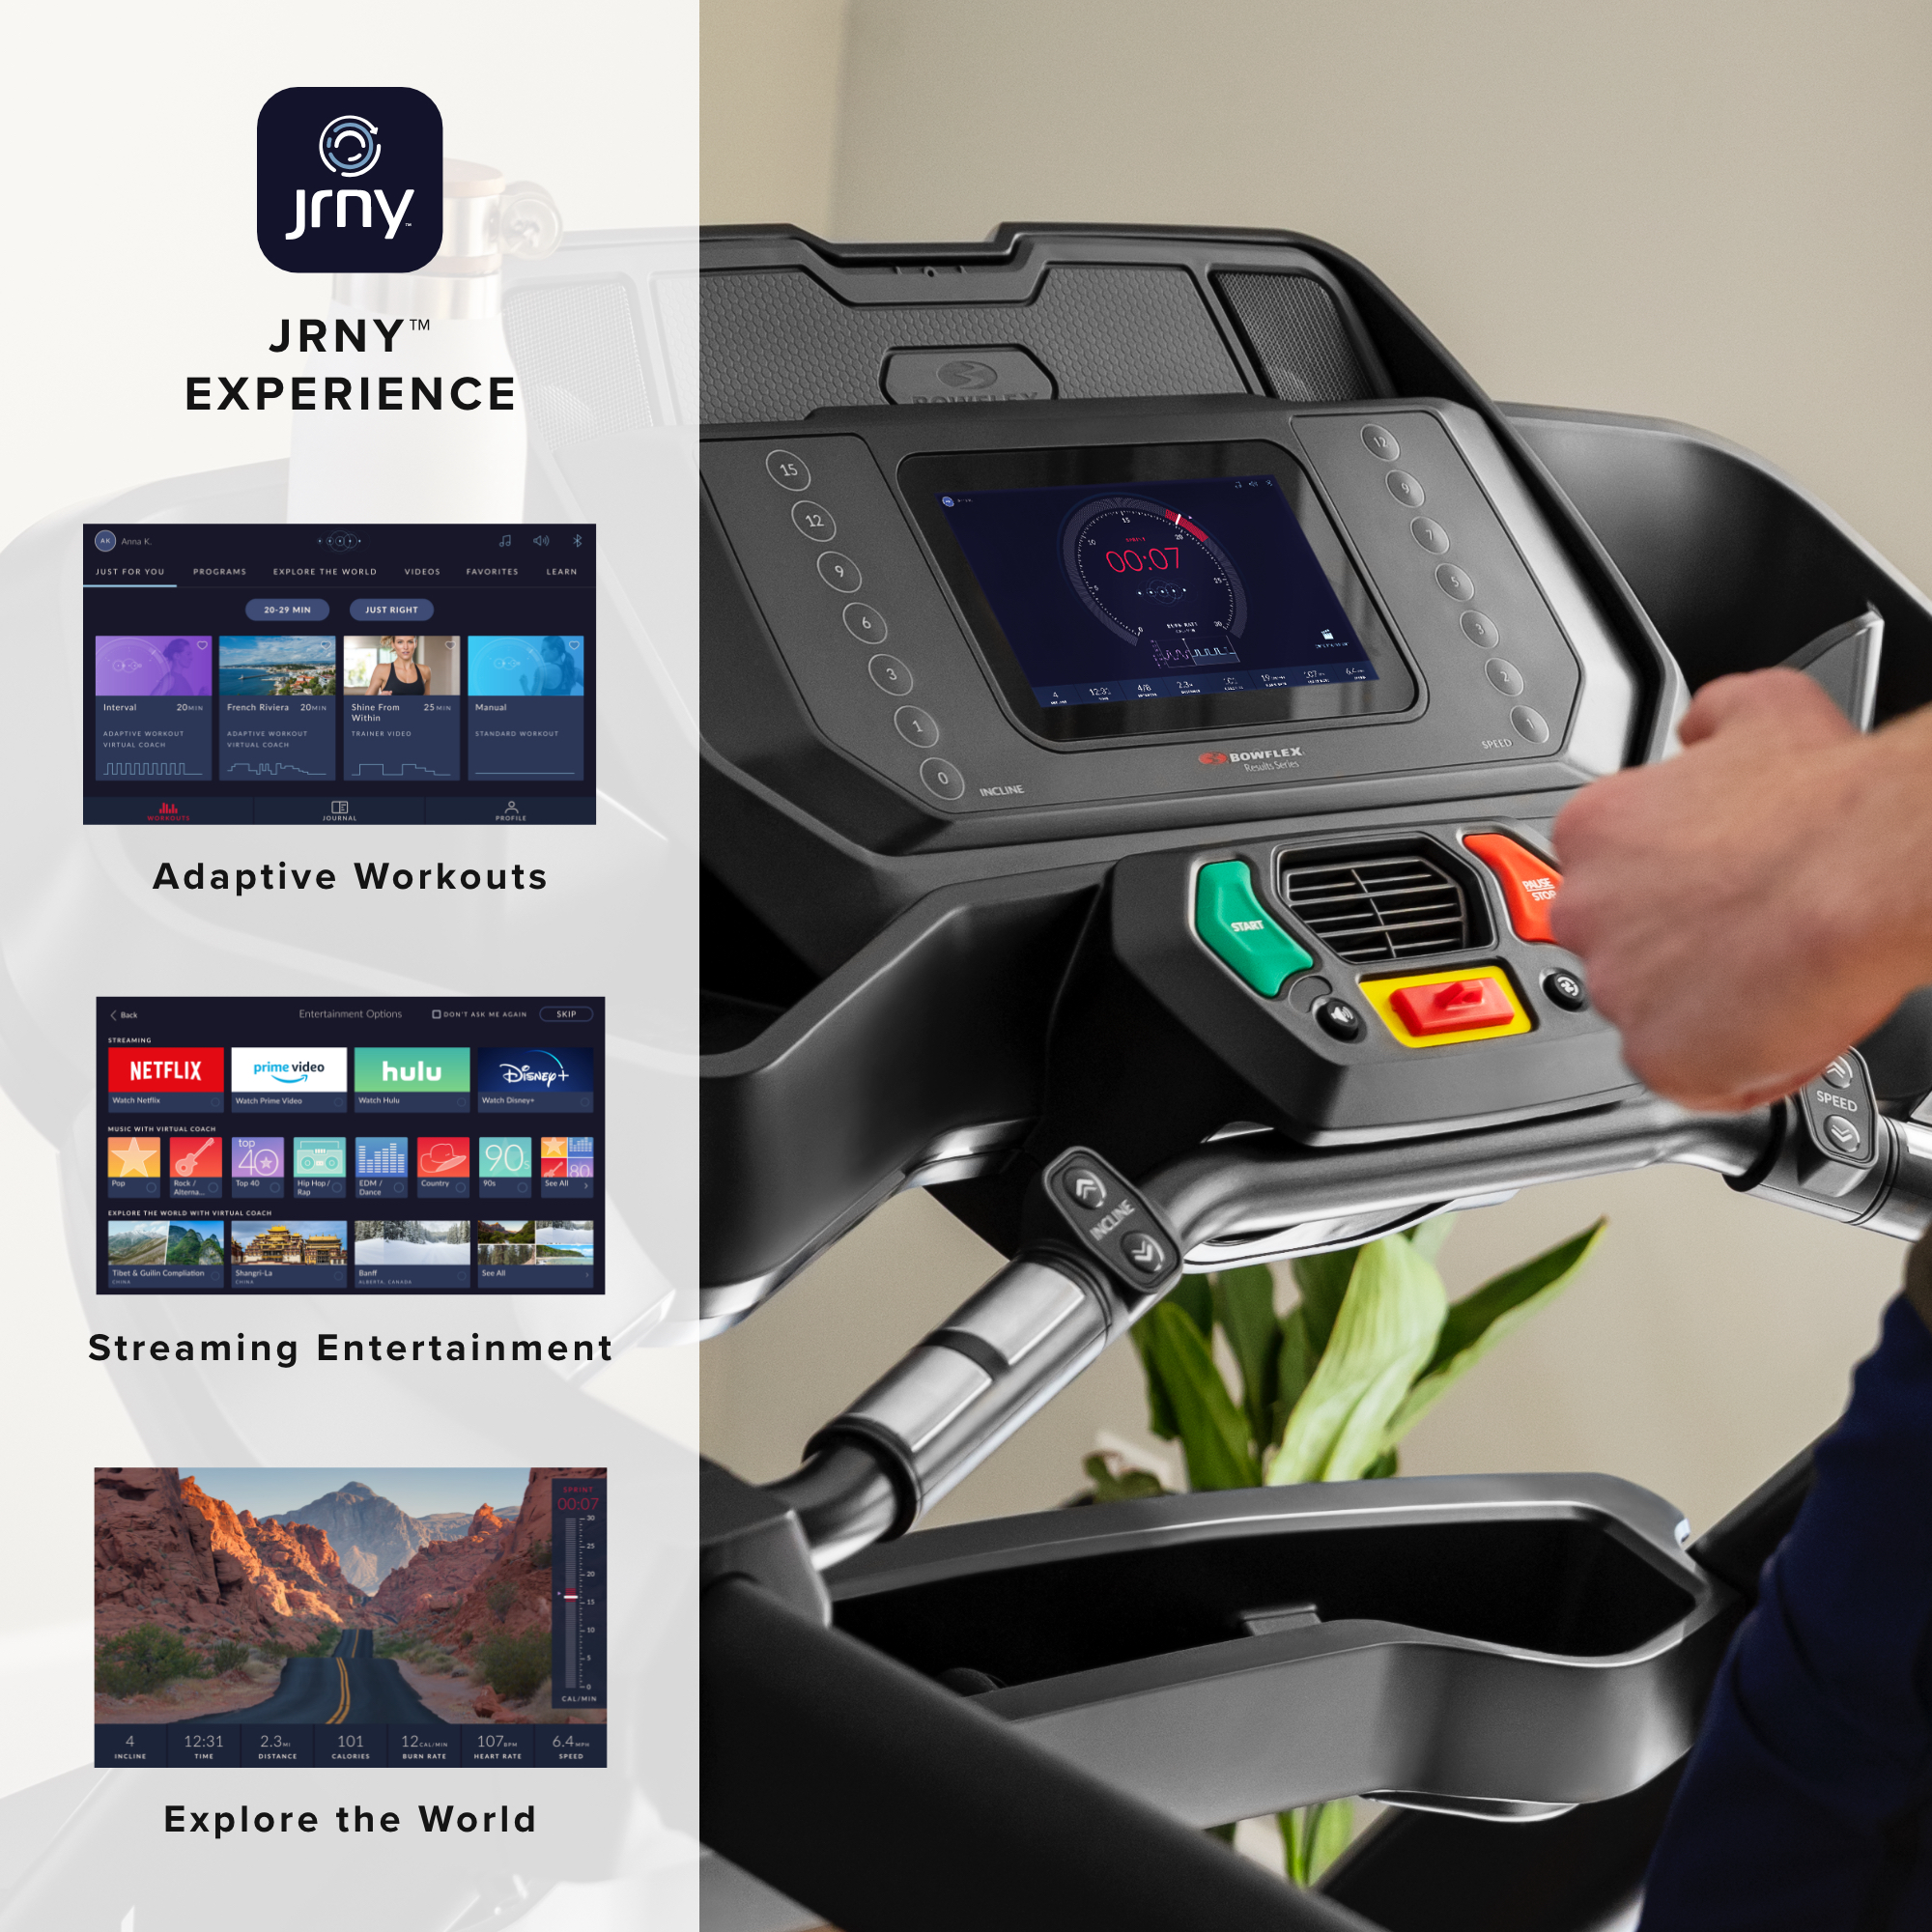 Bowflex Treadmill 7, 15% Motorized Max Incline, HD Touchscreen, Bluetooth Enabled, 375 lb Max Capacity, Free 1-Year JRNY Membership - image 4 of 12